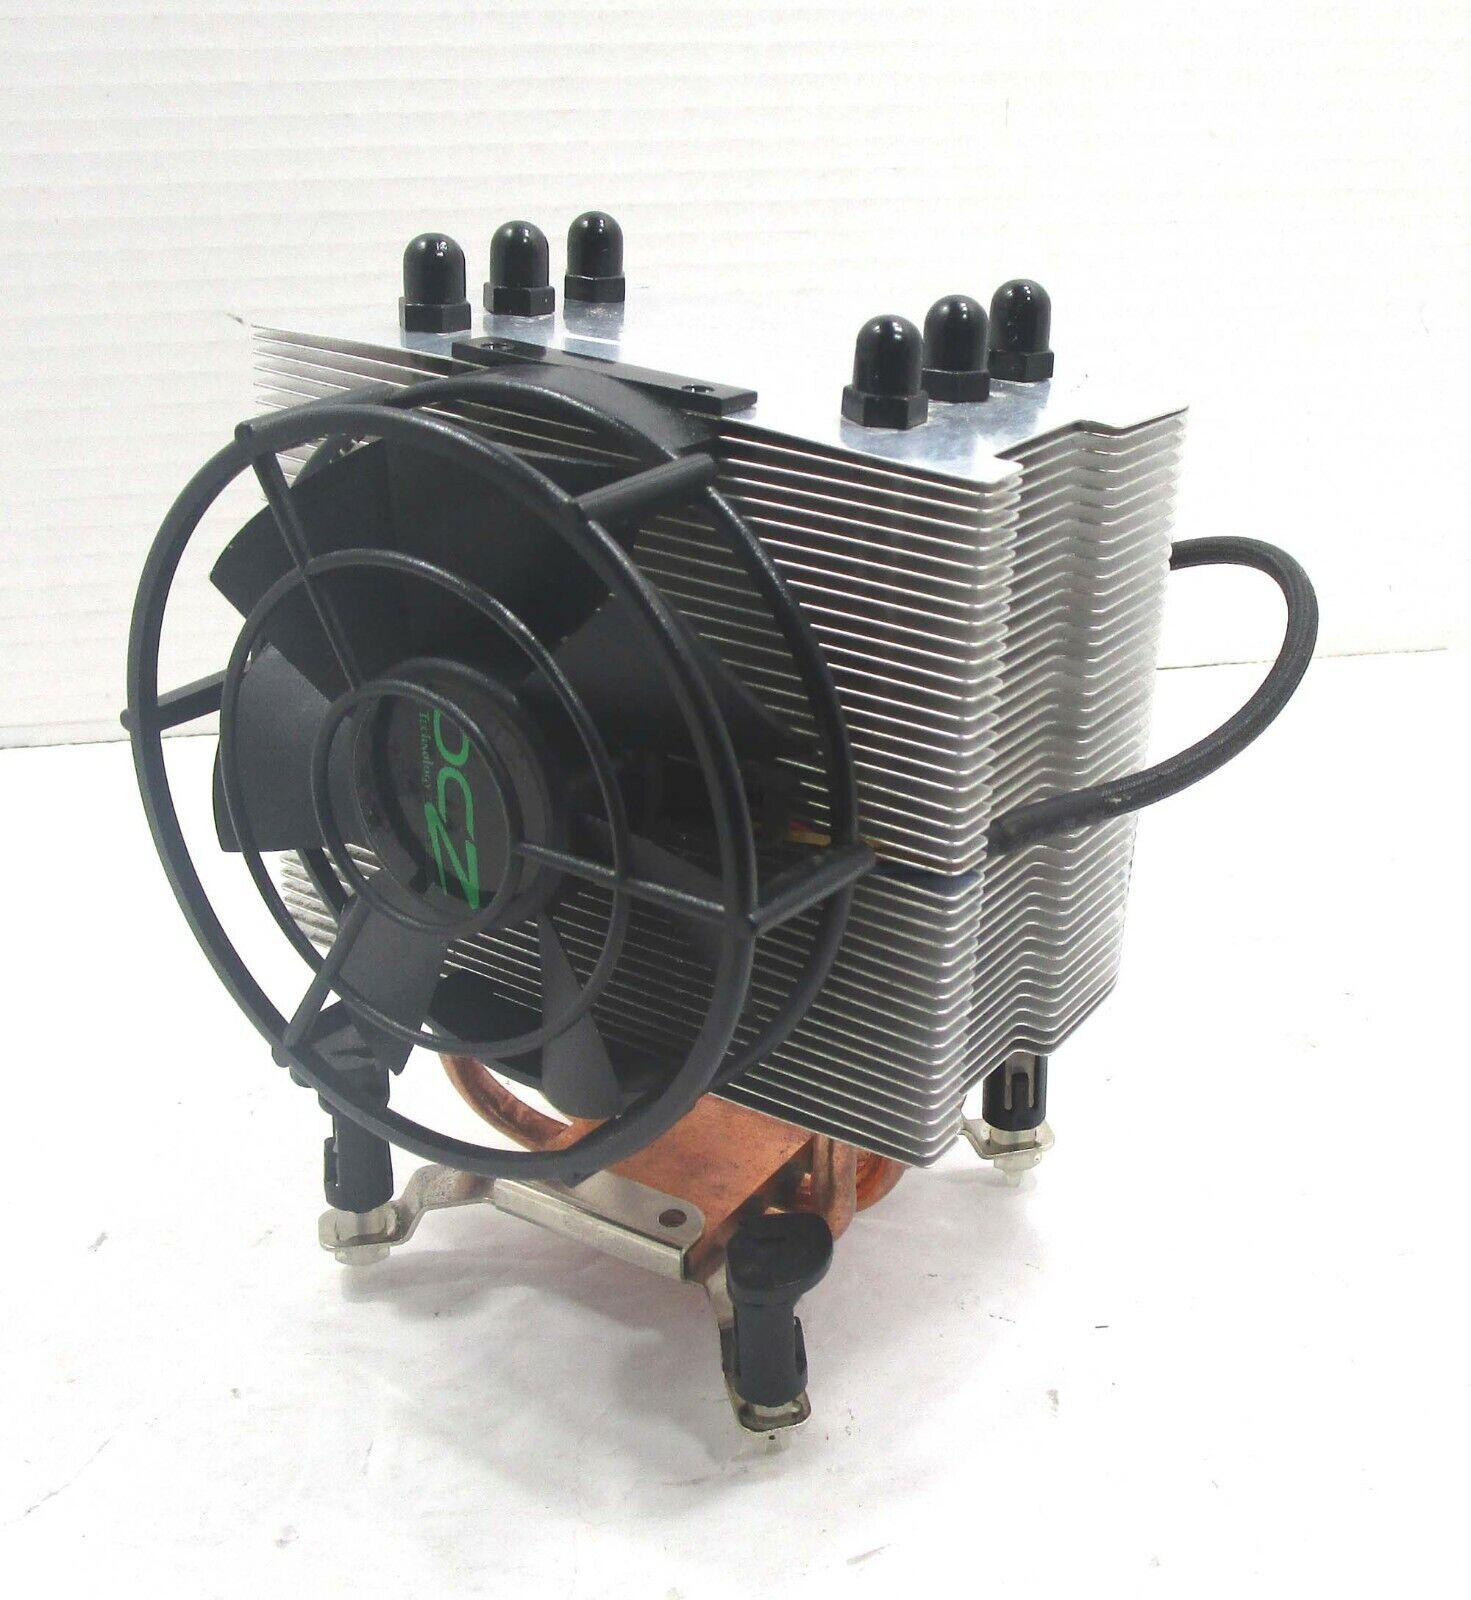 OCZ Vanquisher CPU Cooler For LGA775 Socket